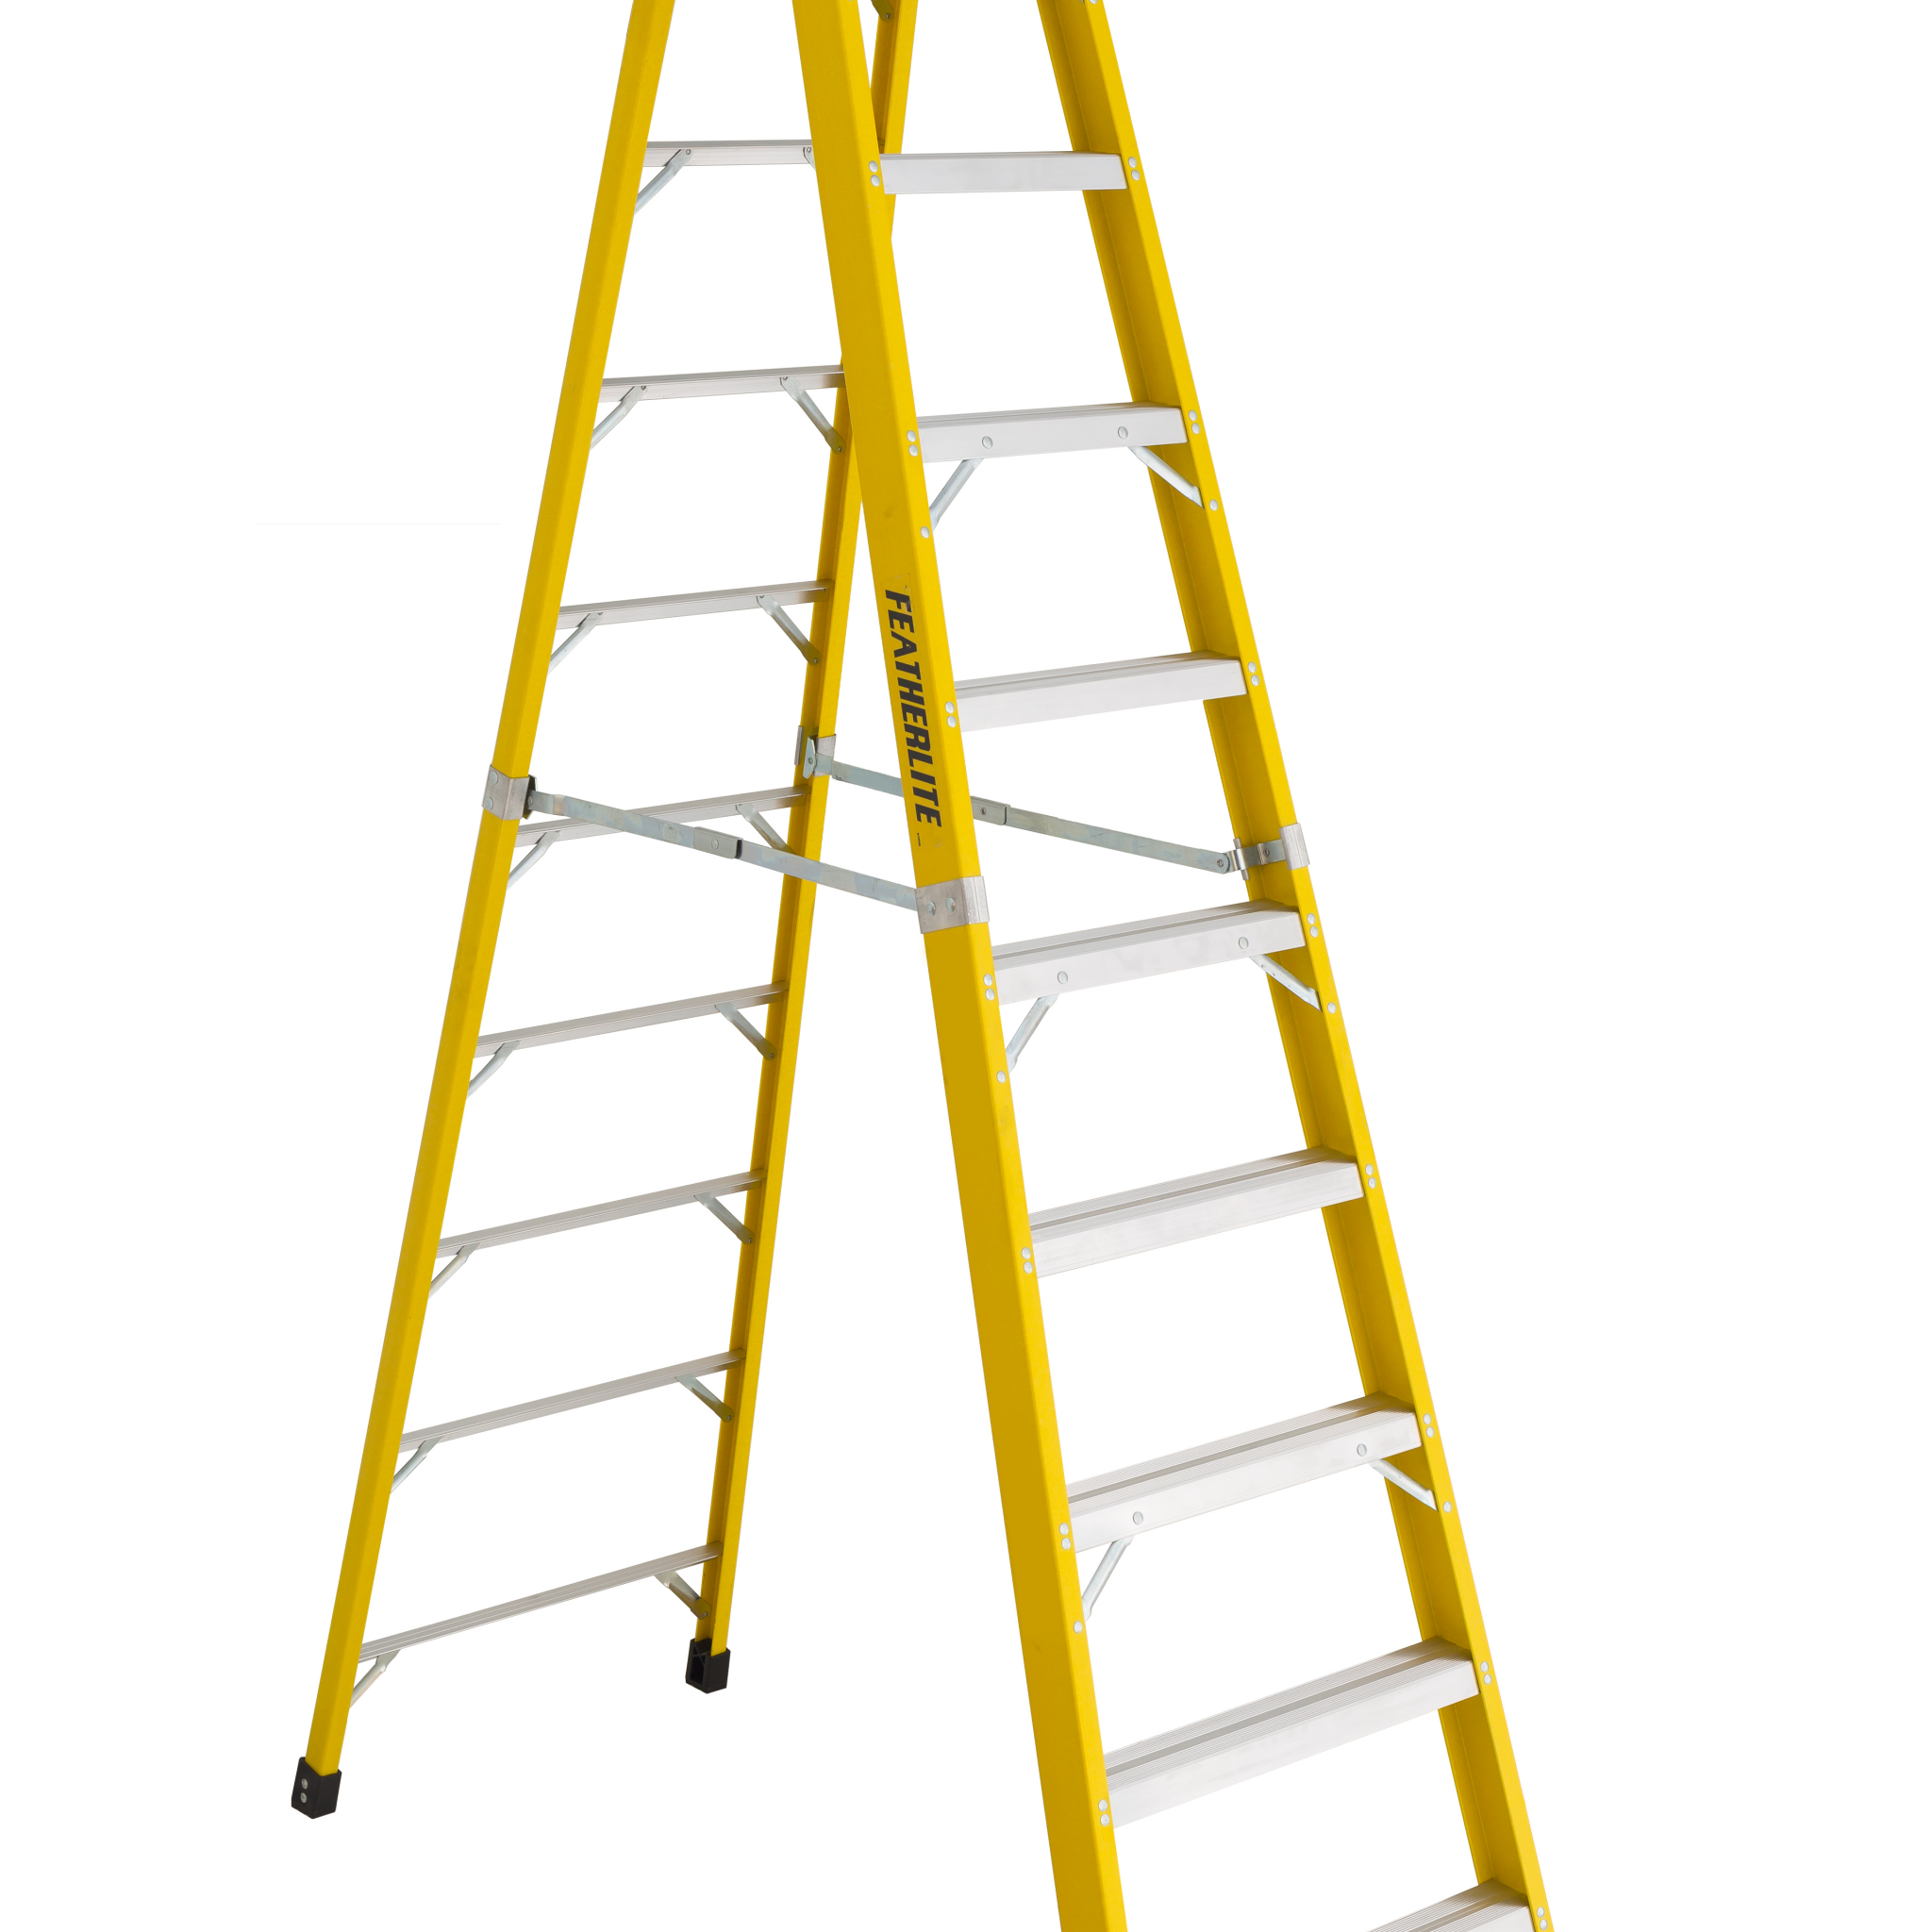 10' Extra Heavy Duty Step Ladder #6410